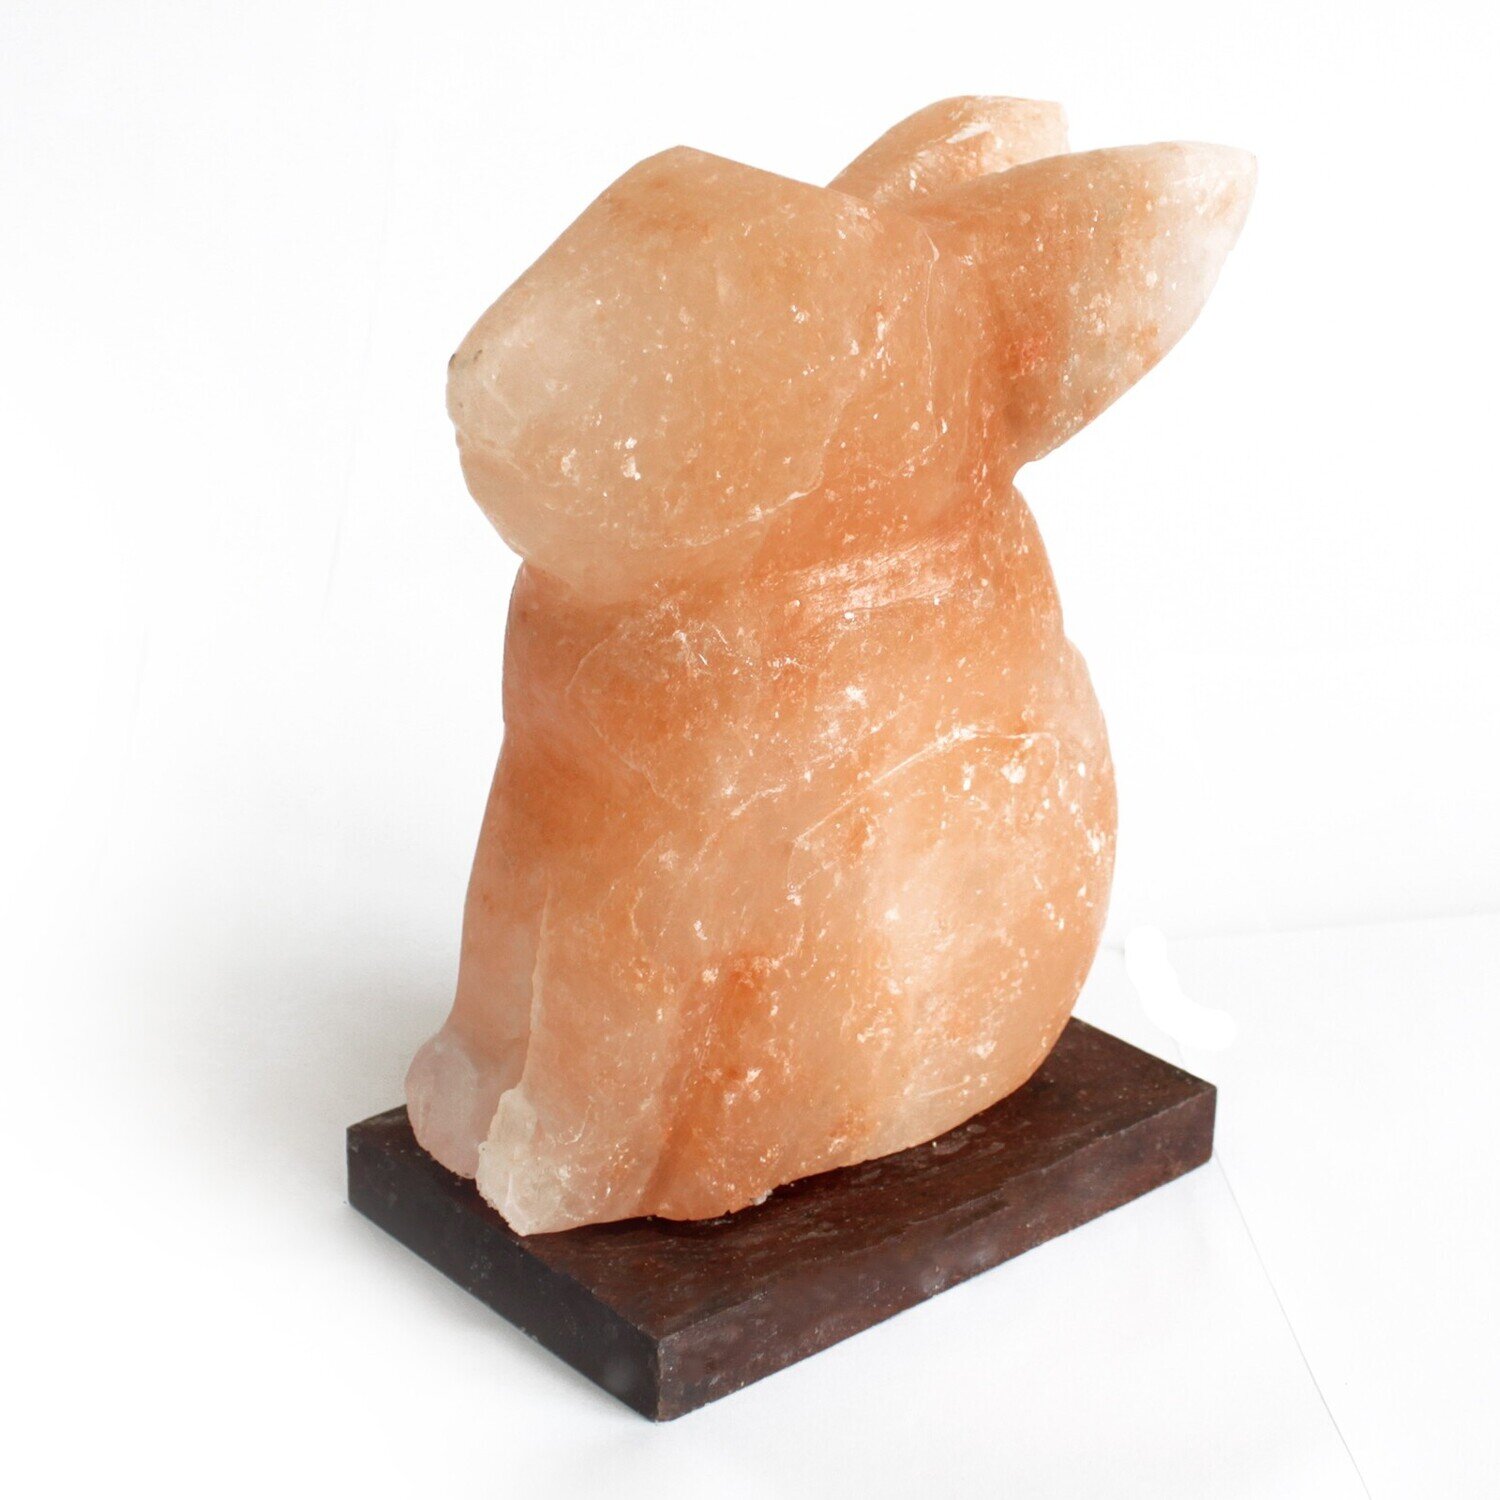 Animal salt lamsp - Rabbit